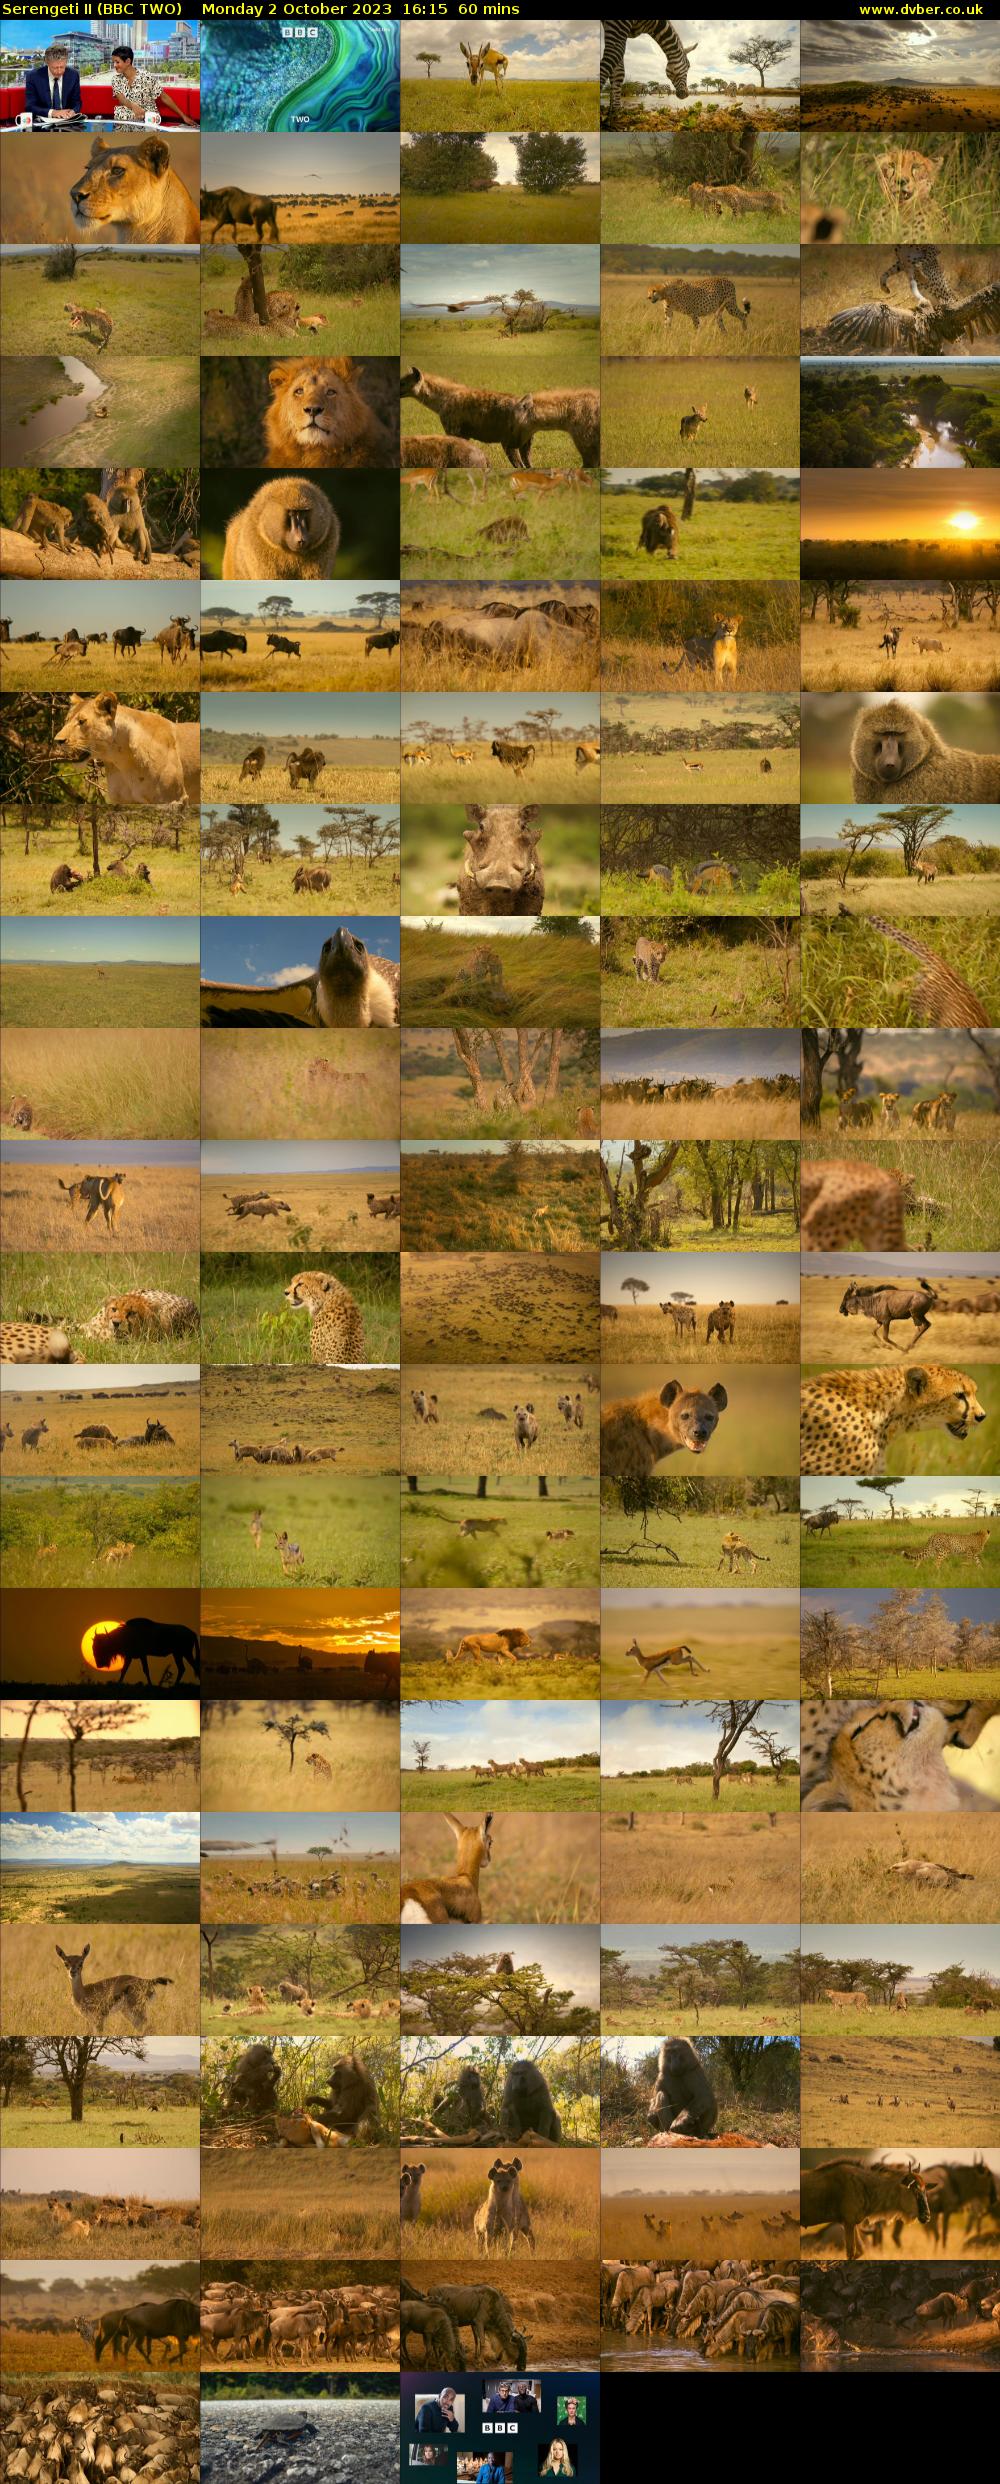 Serengeti II (BBC TWO) Monday 2 October 2023 16:15 - 17:15